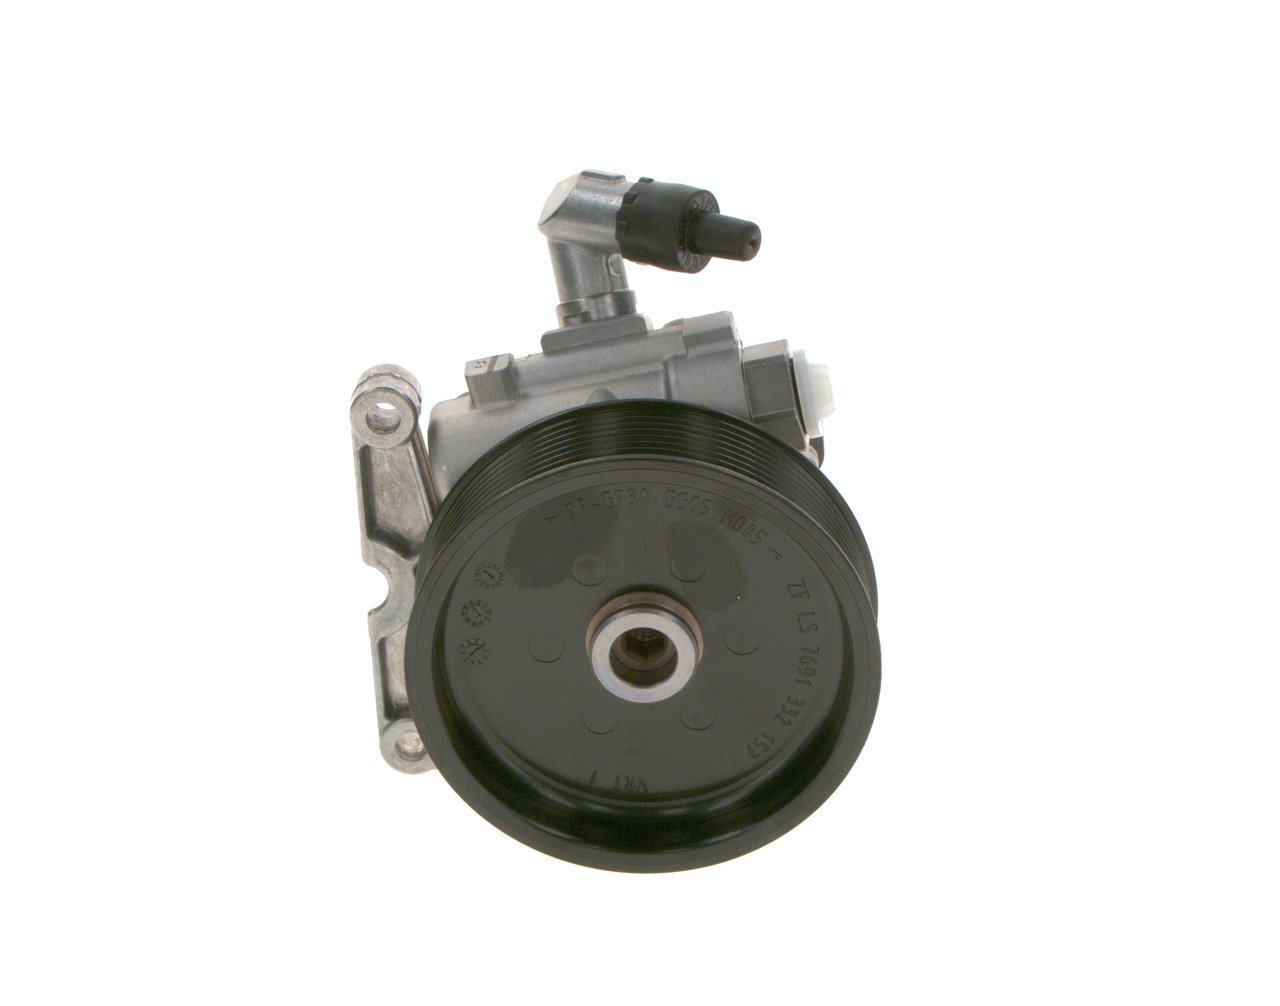 BOSCH K S00 000 704 Power steering pump Hydraulic, Pressure-limiting Valve, Vane Pump, Clockwise rotation